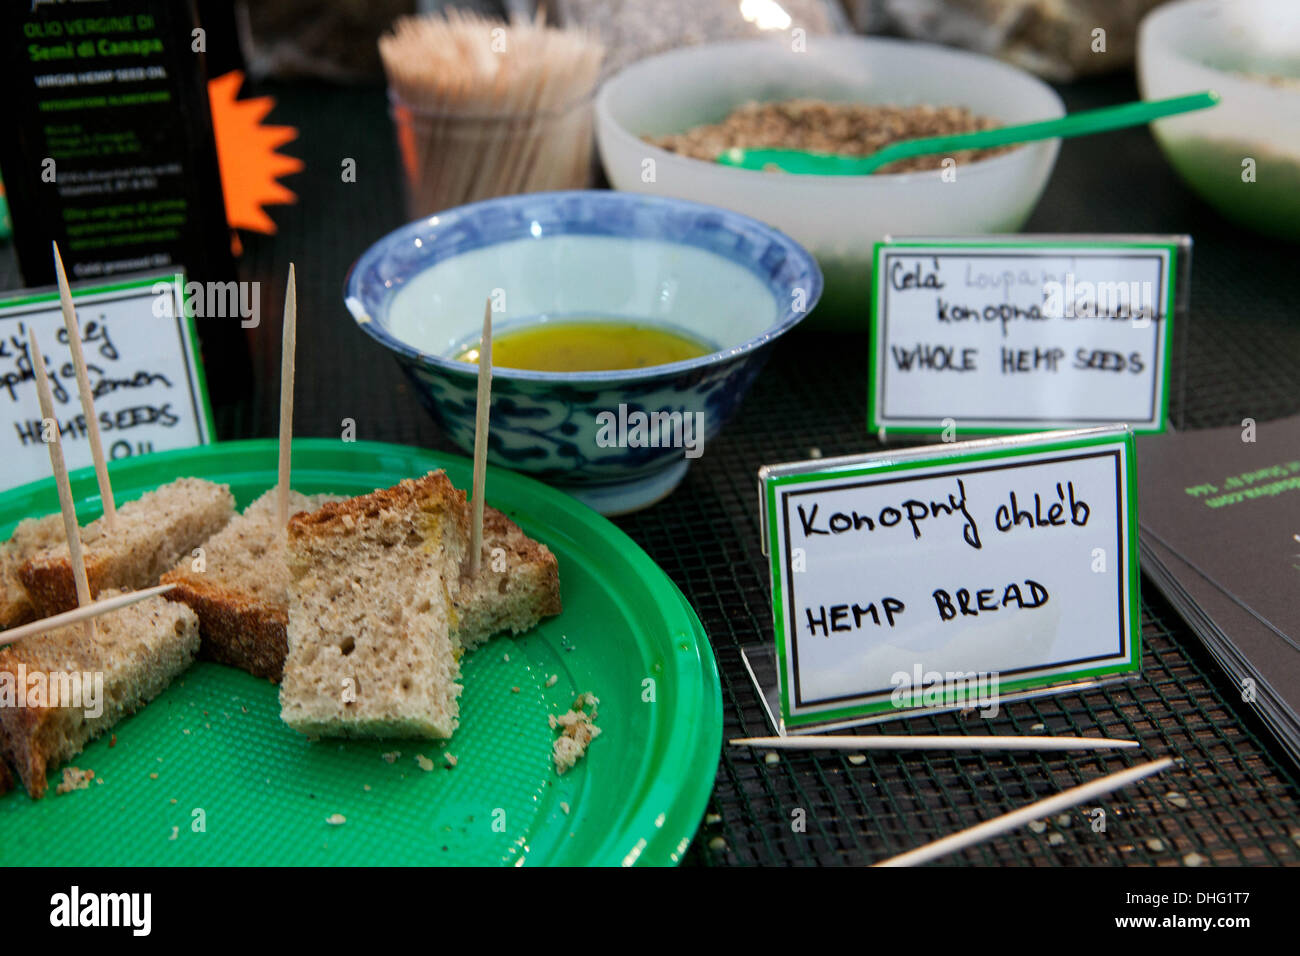 Hemp Fair.Hemp bread, oil and seeds to taste. Stock Photo